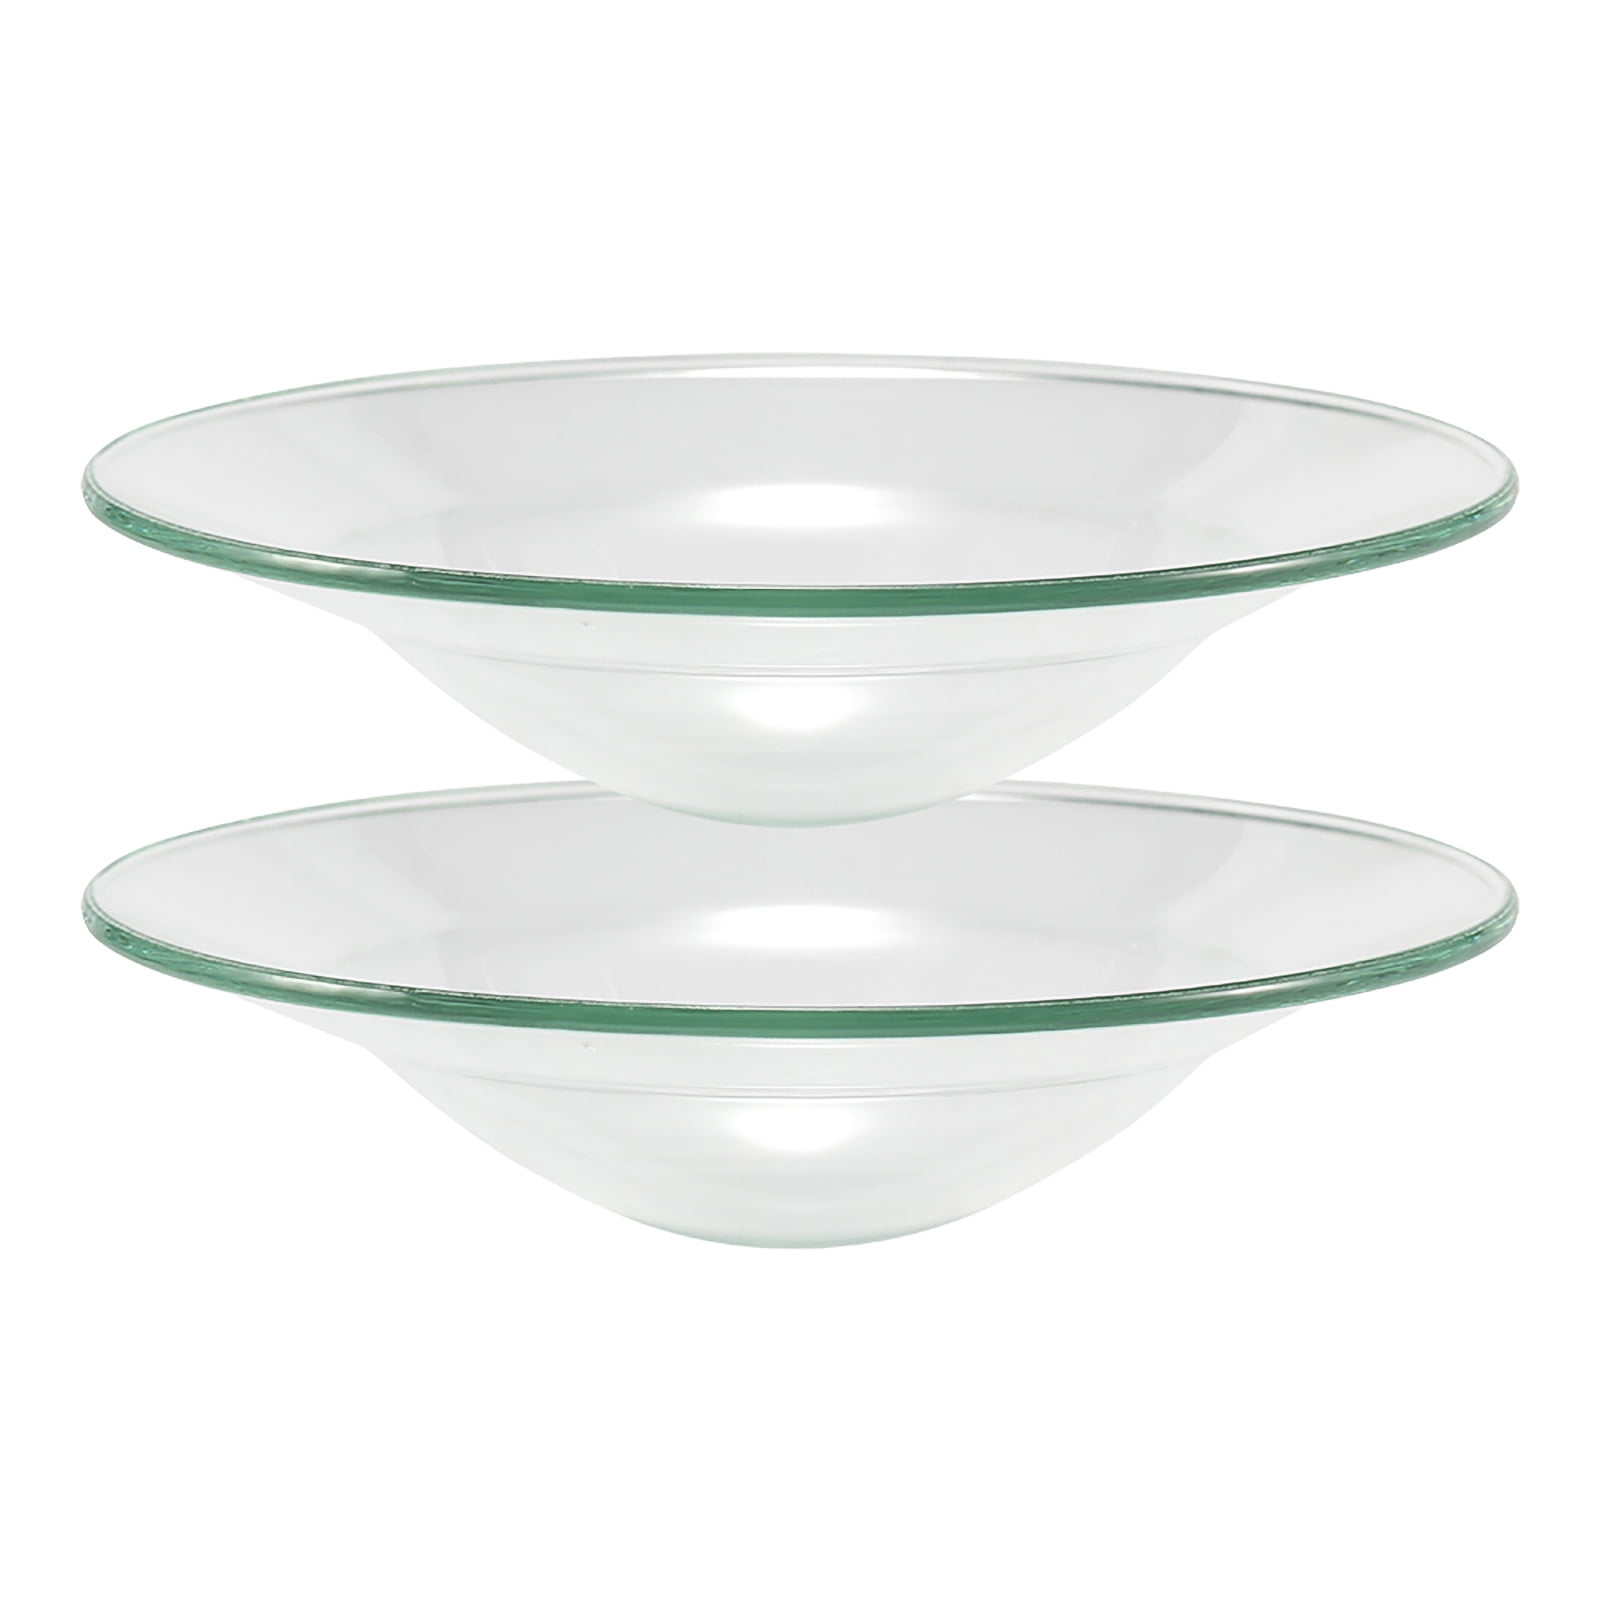  Replacement Oil Warmer Dish Round Glass Dish Wax Melt